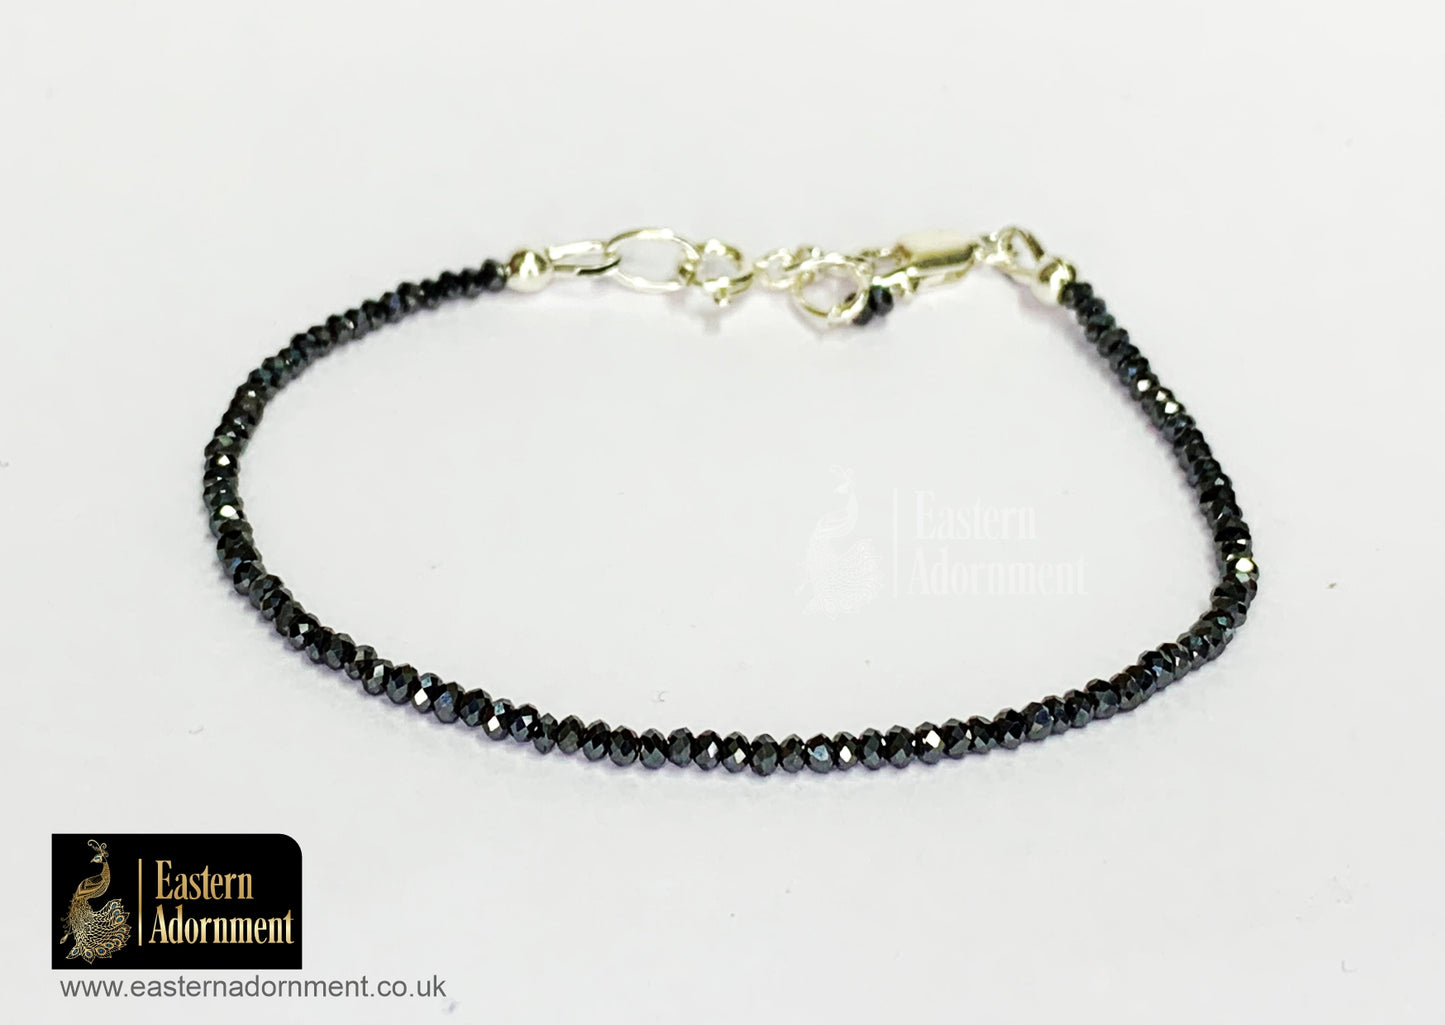 Hematite Micro Cut Bead Bracelet with Silver Charm Clasp